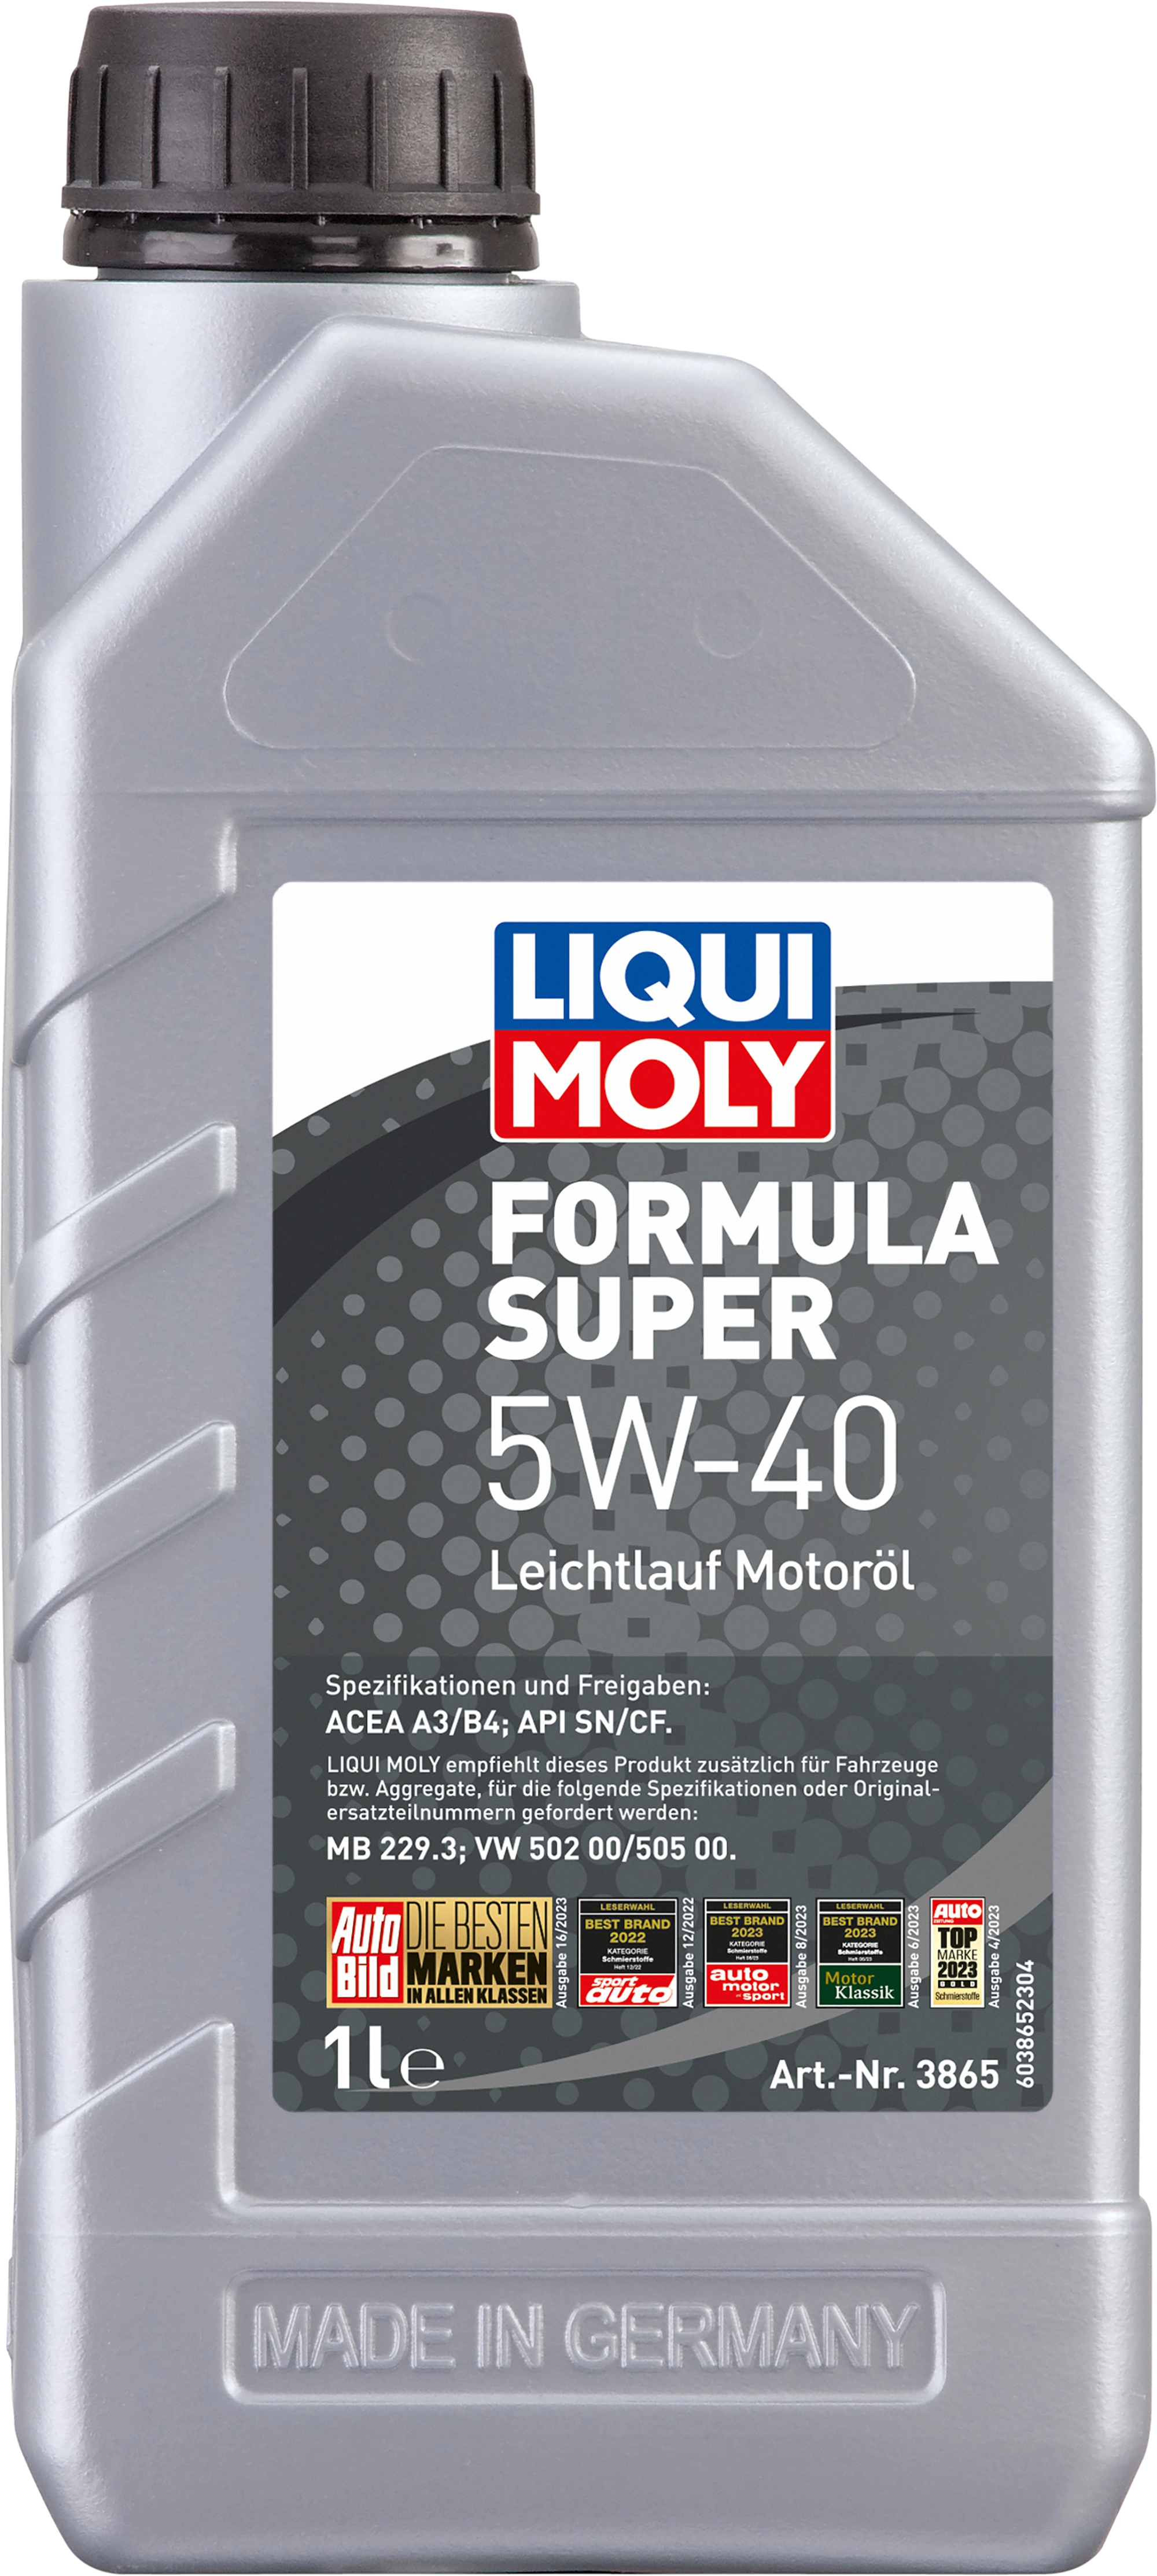 Liqui Moly Formula Super 5W-40 1 l kaufen bei OBI